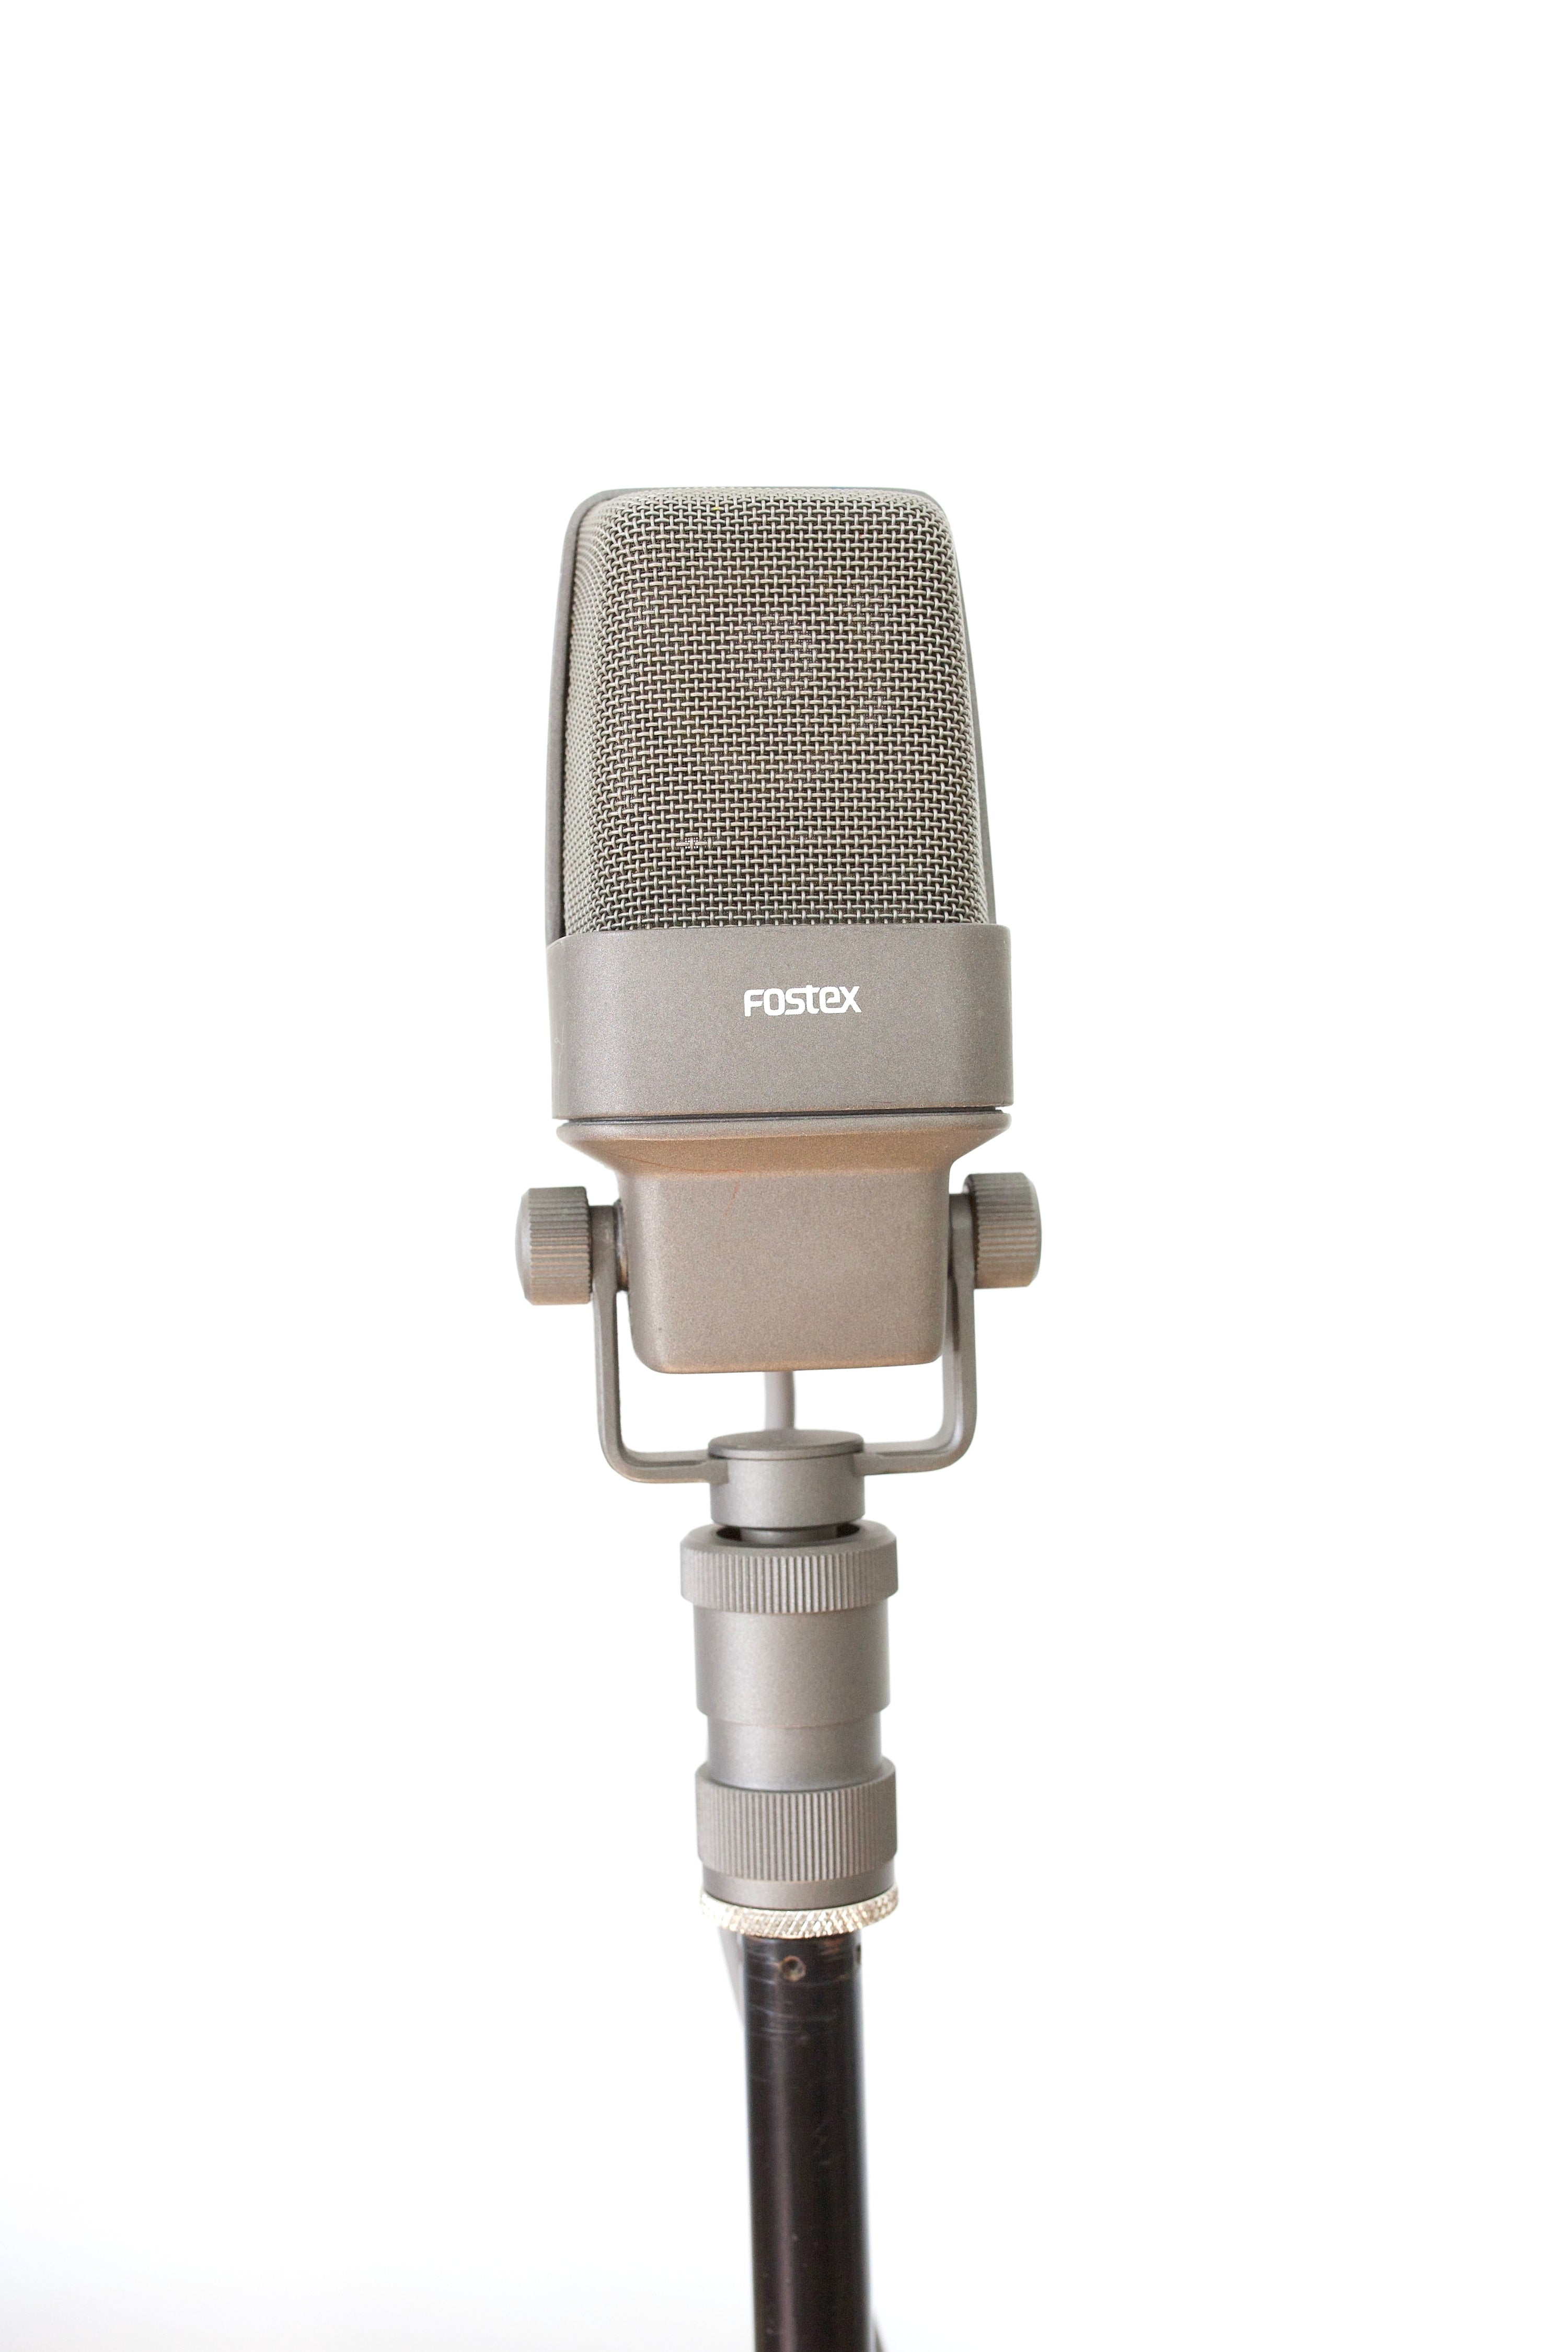 Fostex M11RP Printed Ribbon Microphone